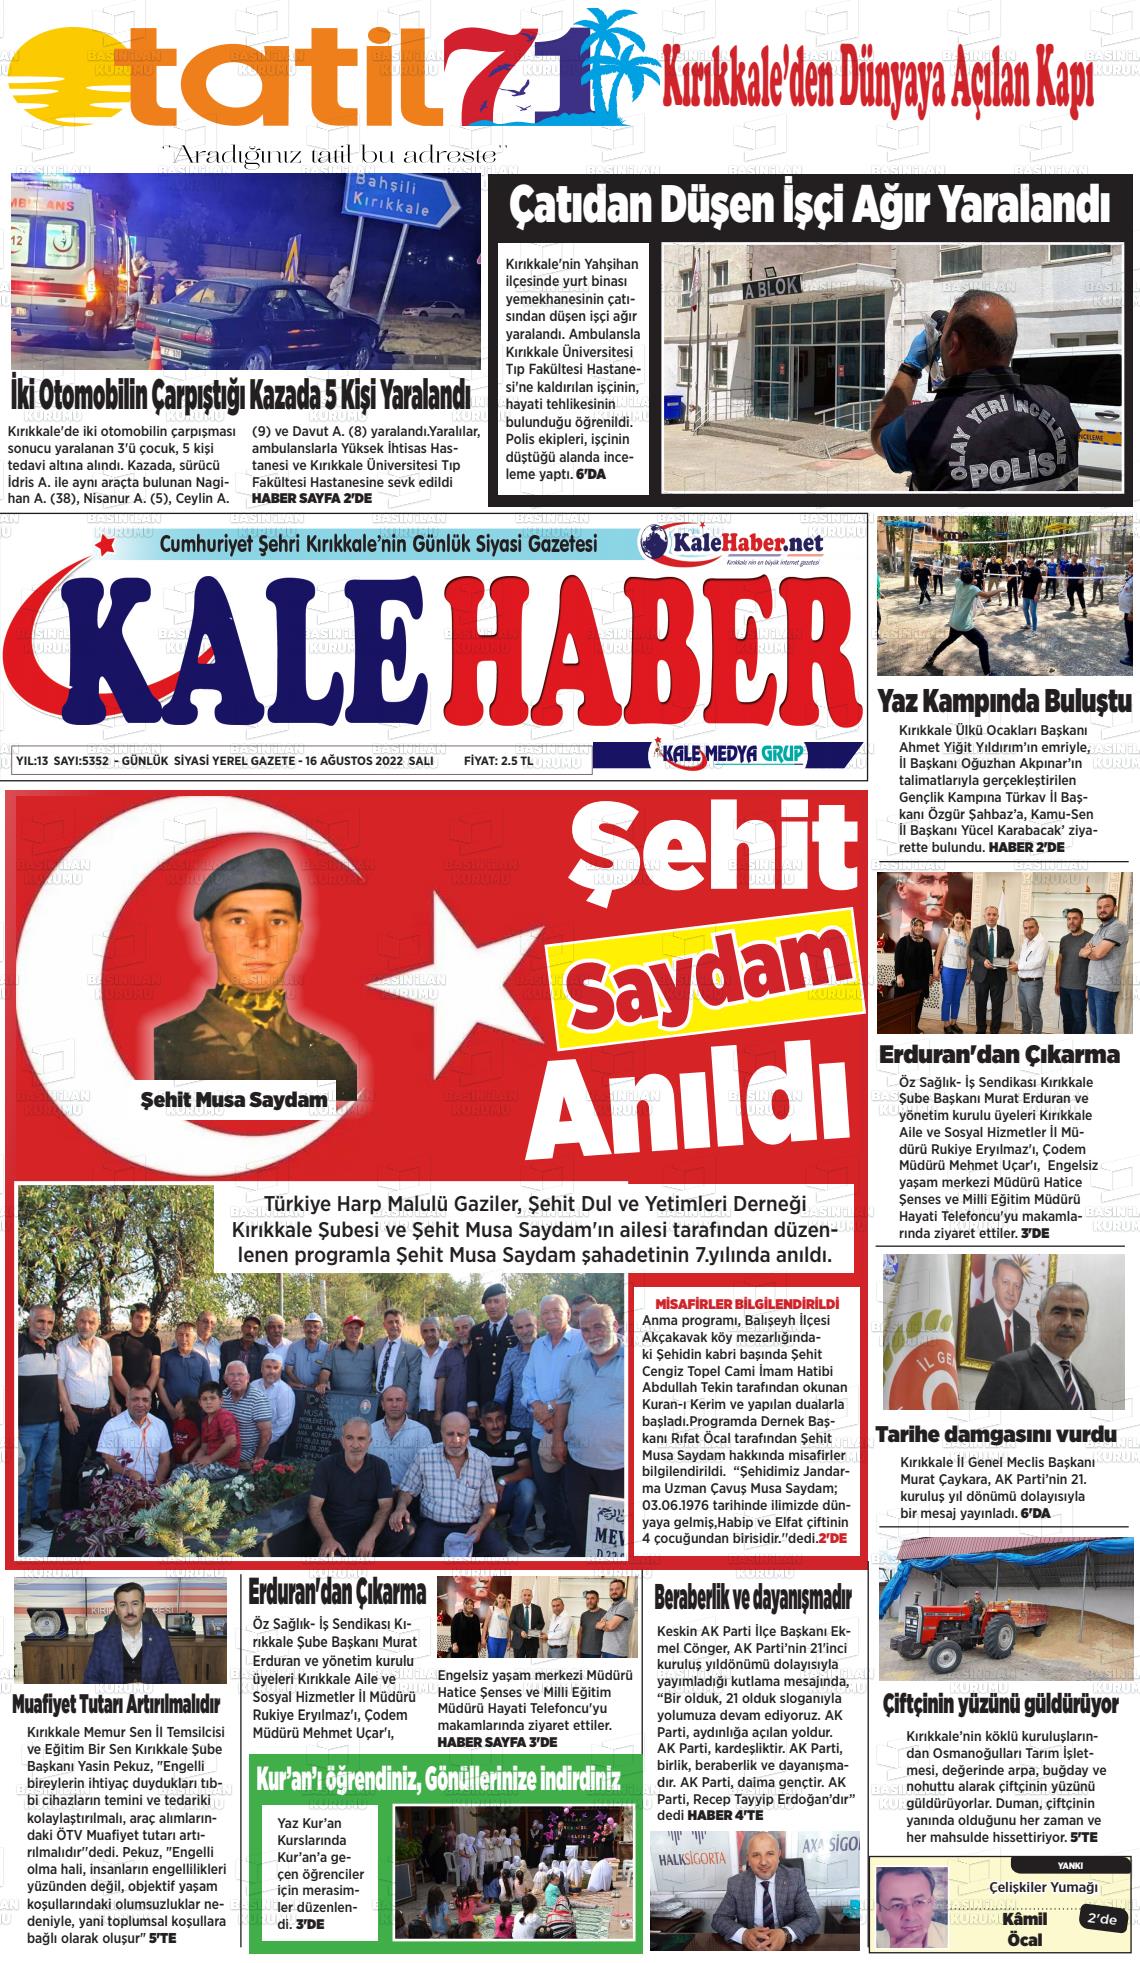 16 Ağustos 2022 Kale Haber Gazete Manşeti